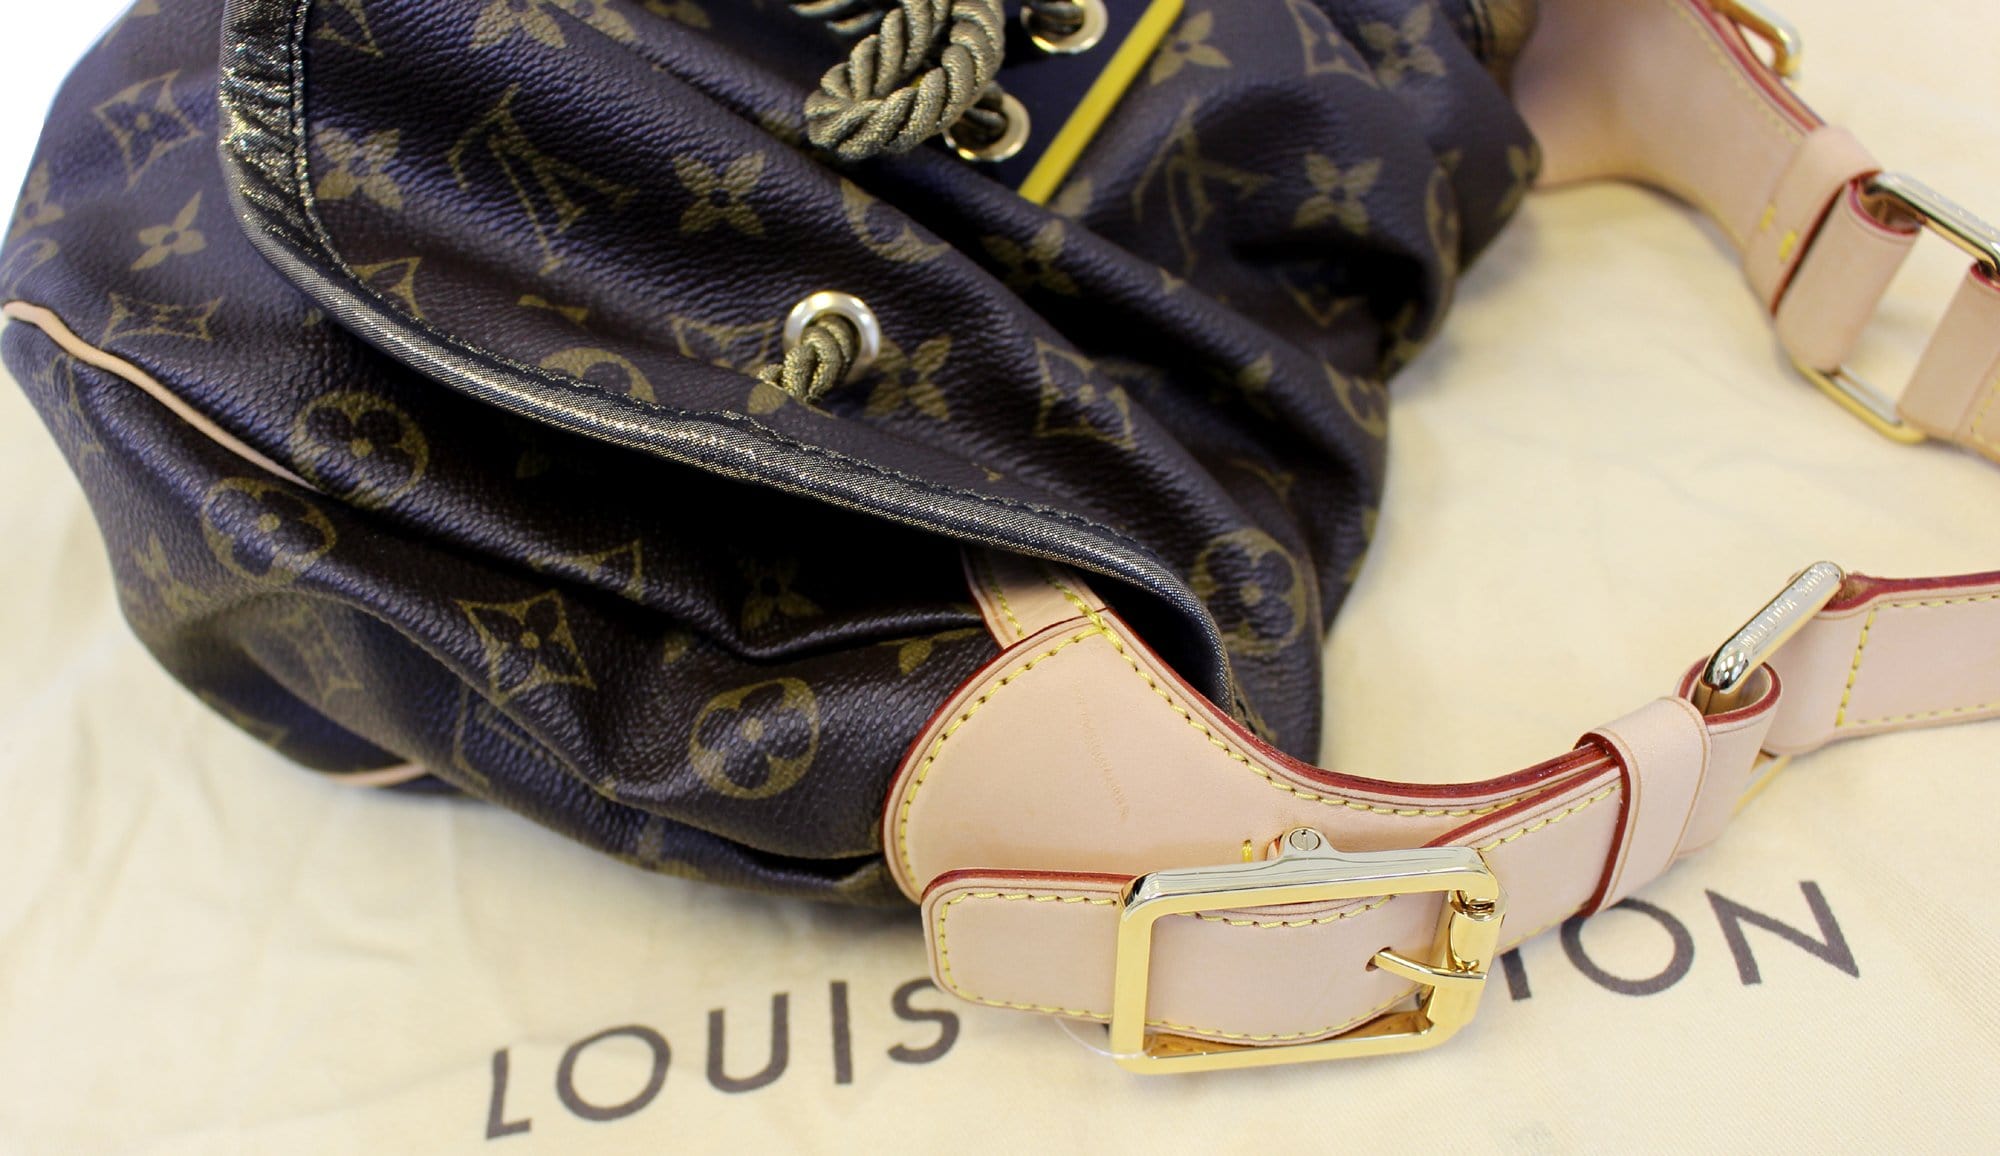 Louis Vuitton Limited Kalahari PM Hobo Flap Bag 5v44ls